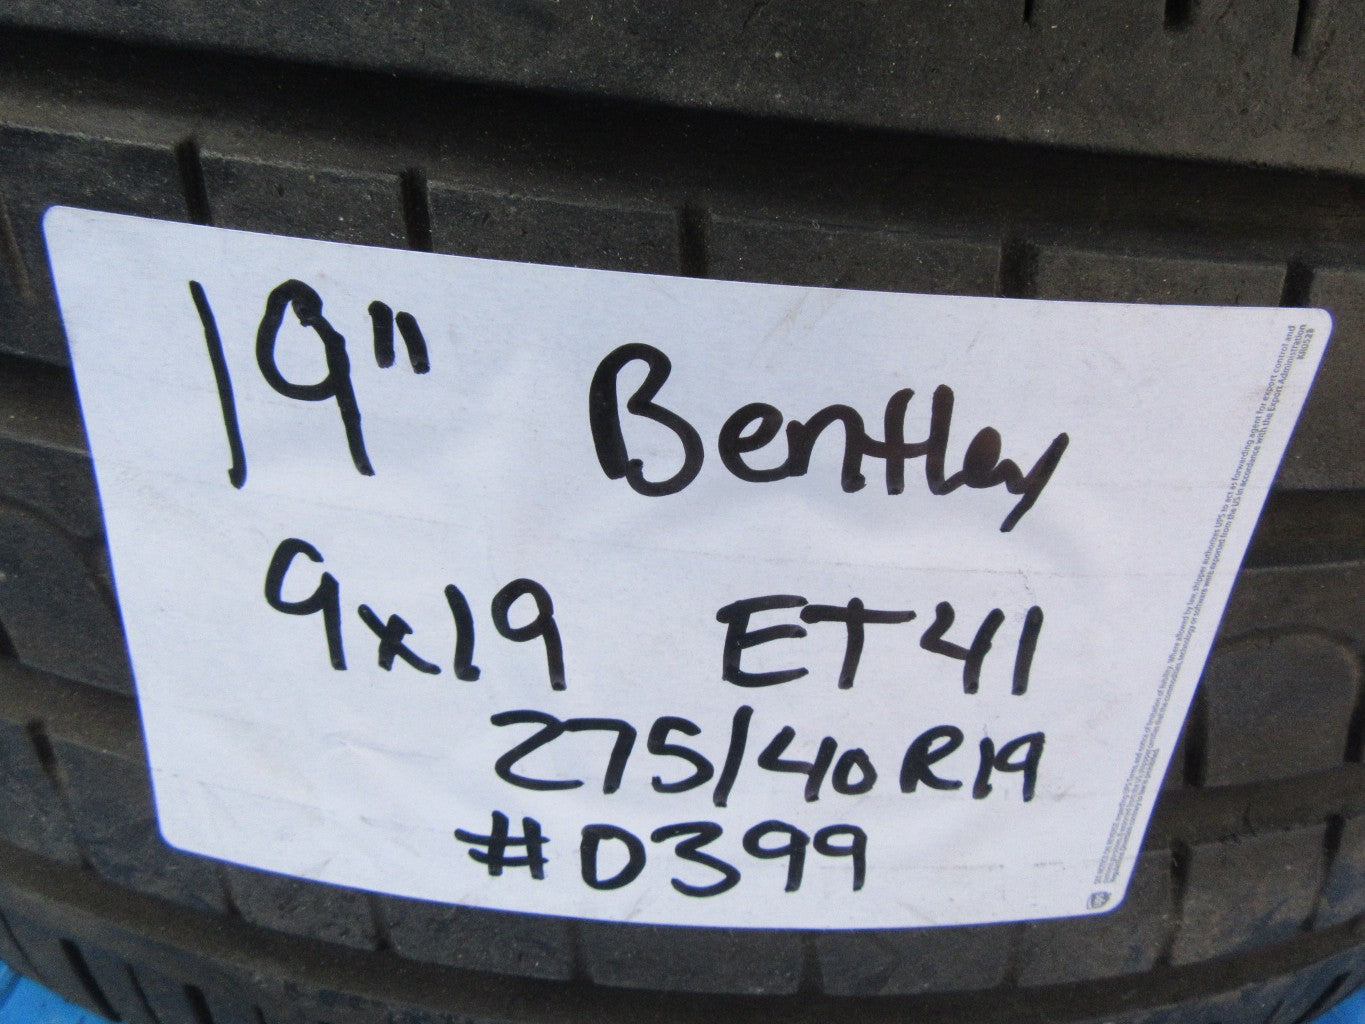 19″ Bentley Continental Gt Gtc Flying Spur Mulliner wheel rim spare #0399